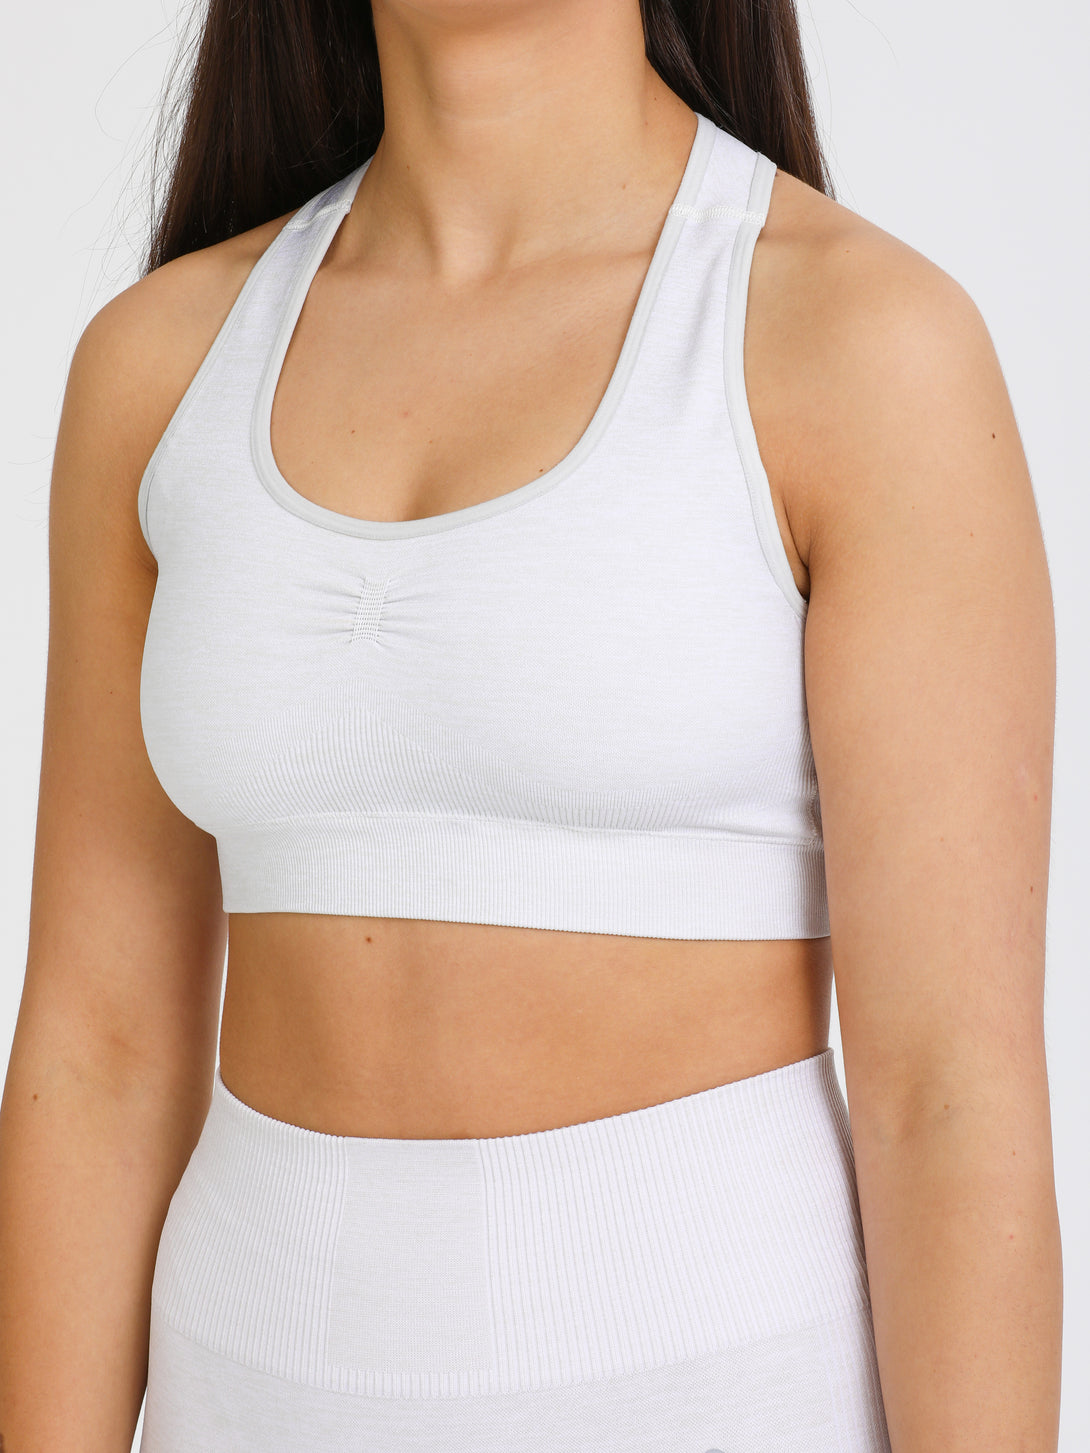 A Woman Wearing Light Grey Color Seamless Medium Support Sports Bra